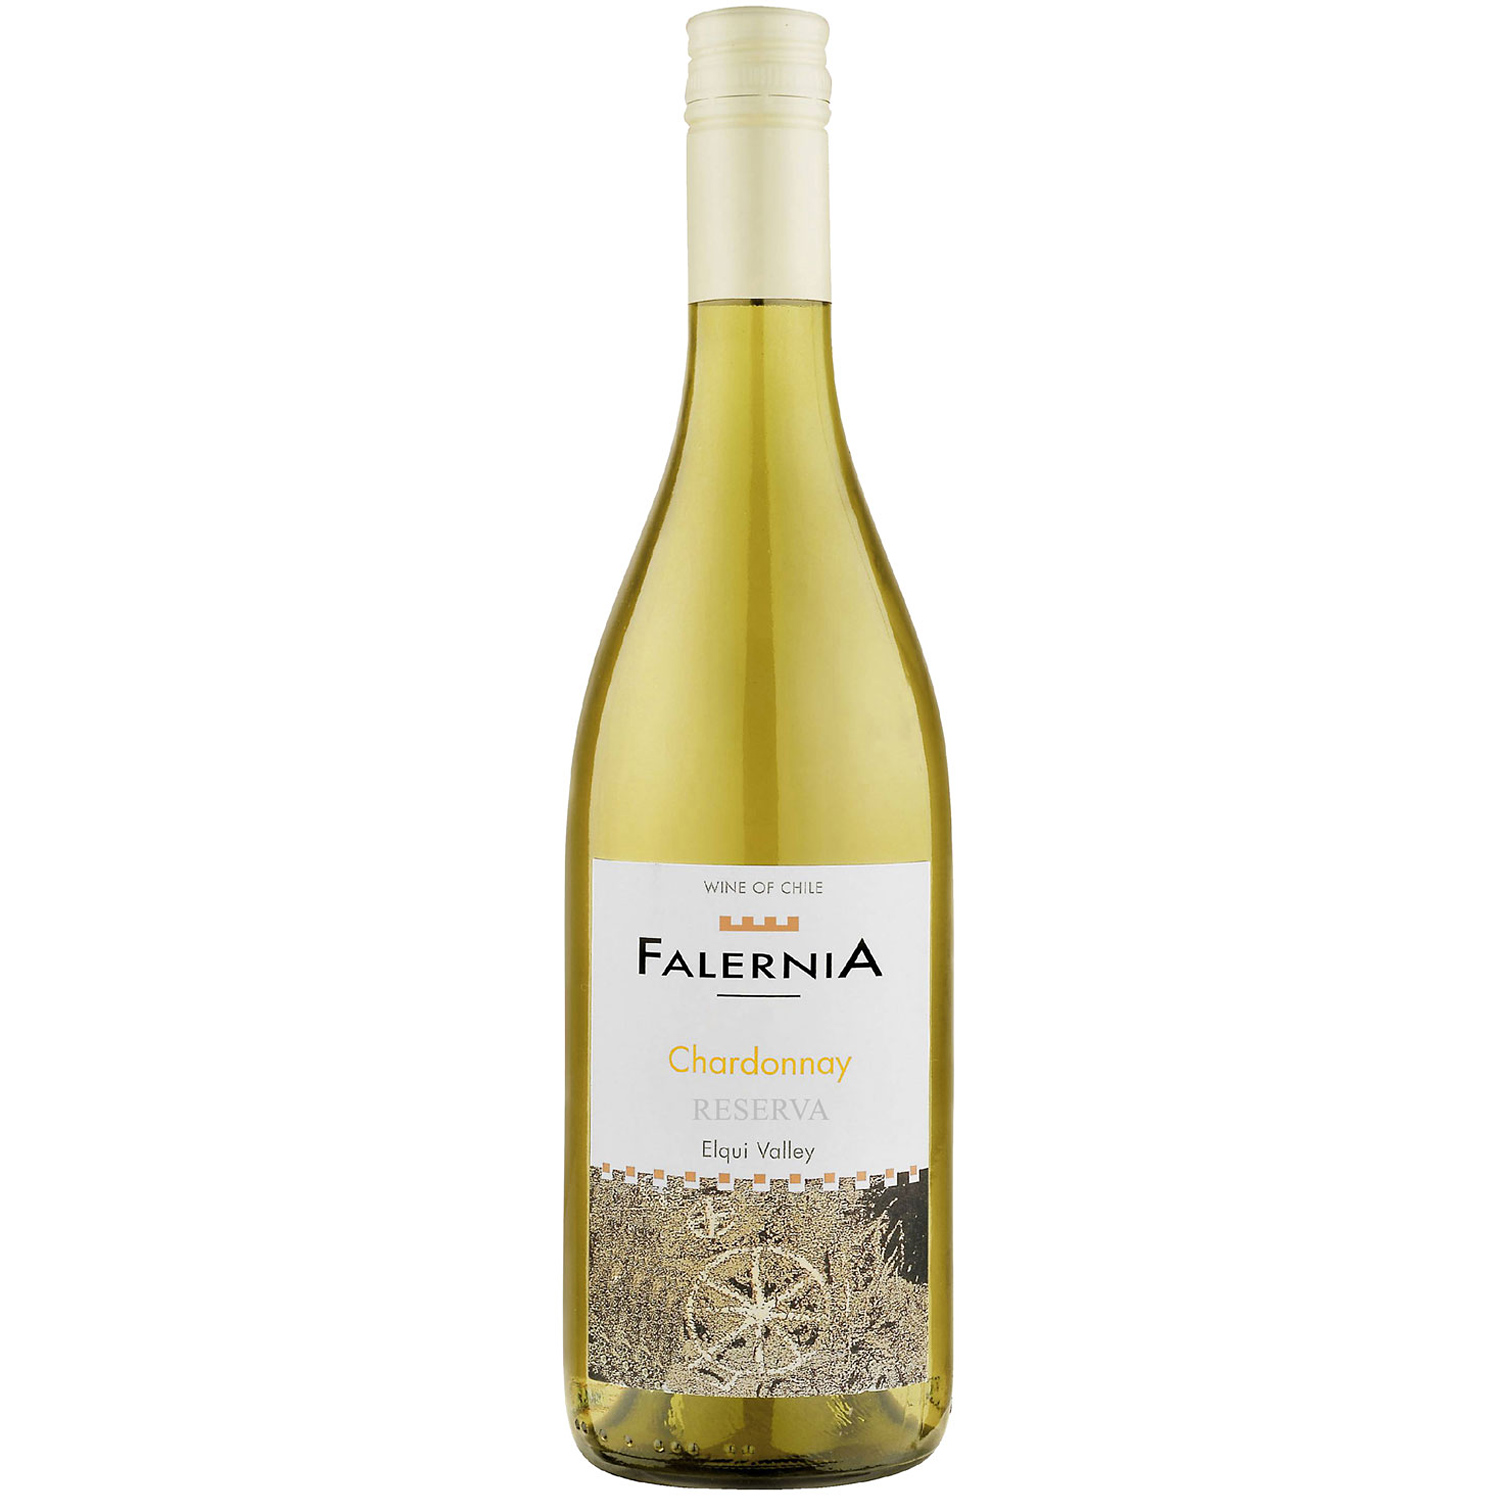 Falernia Chardonnay Reserva 2019